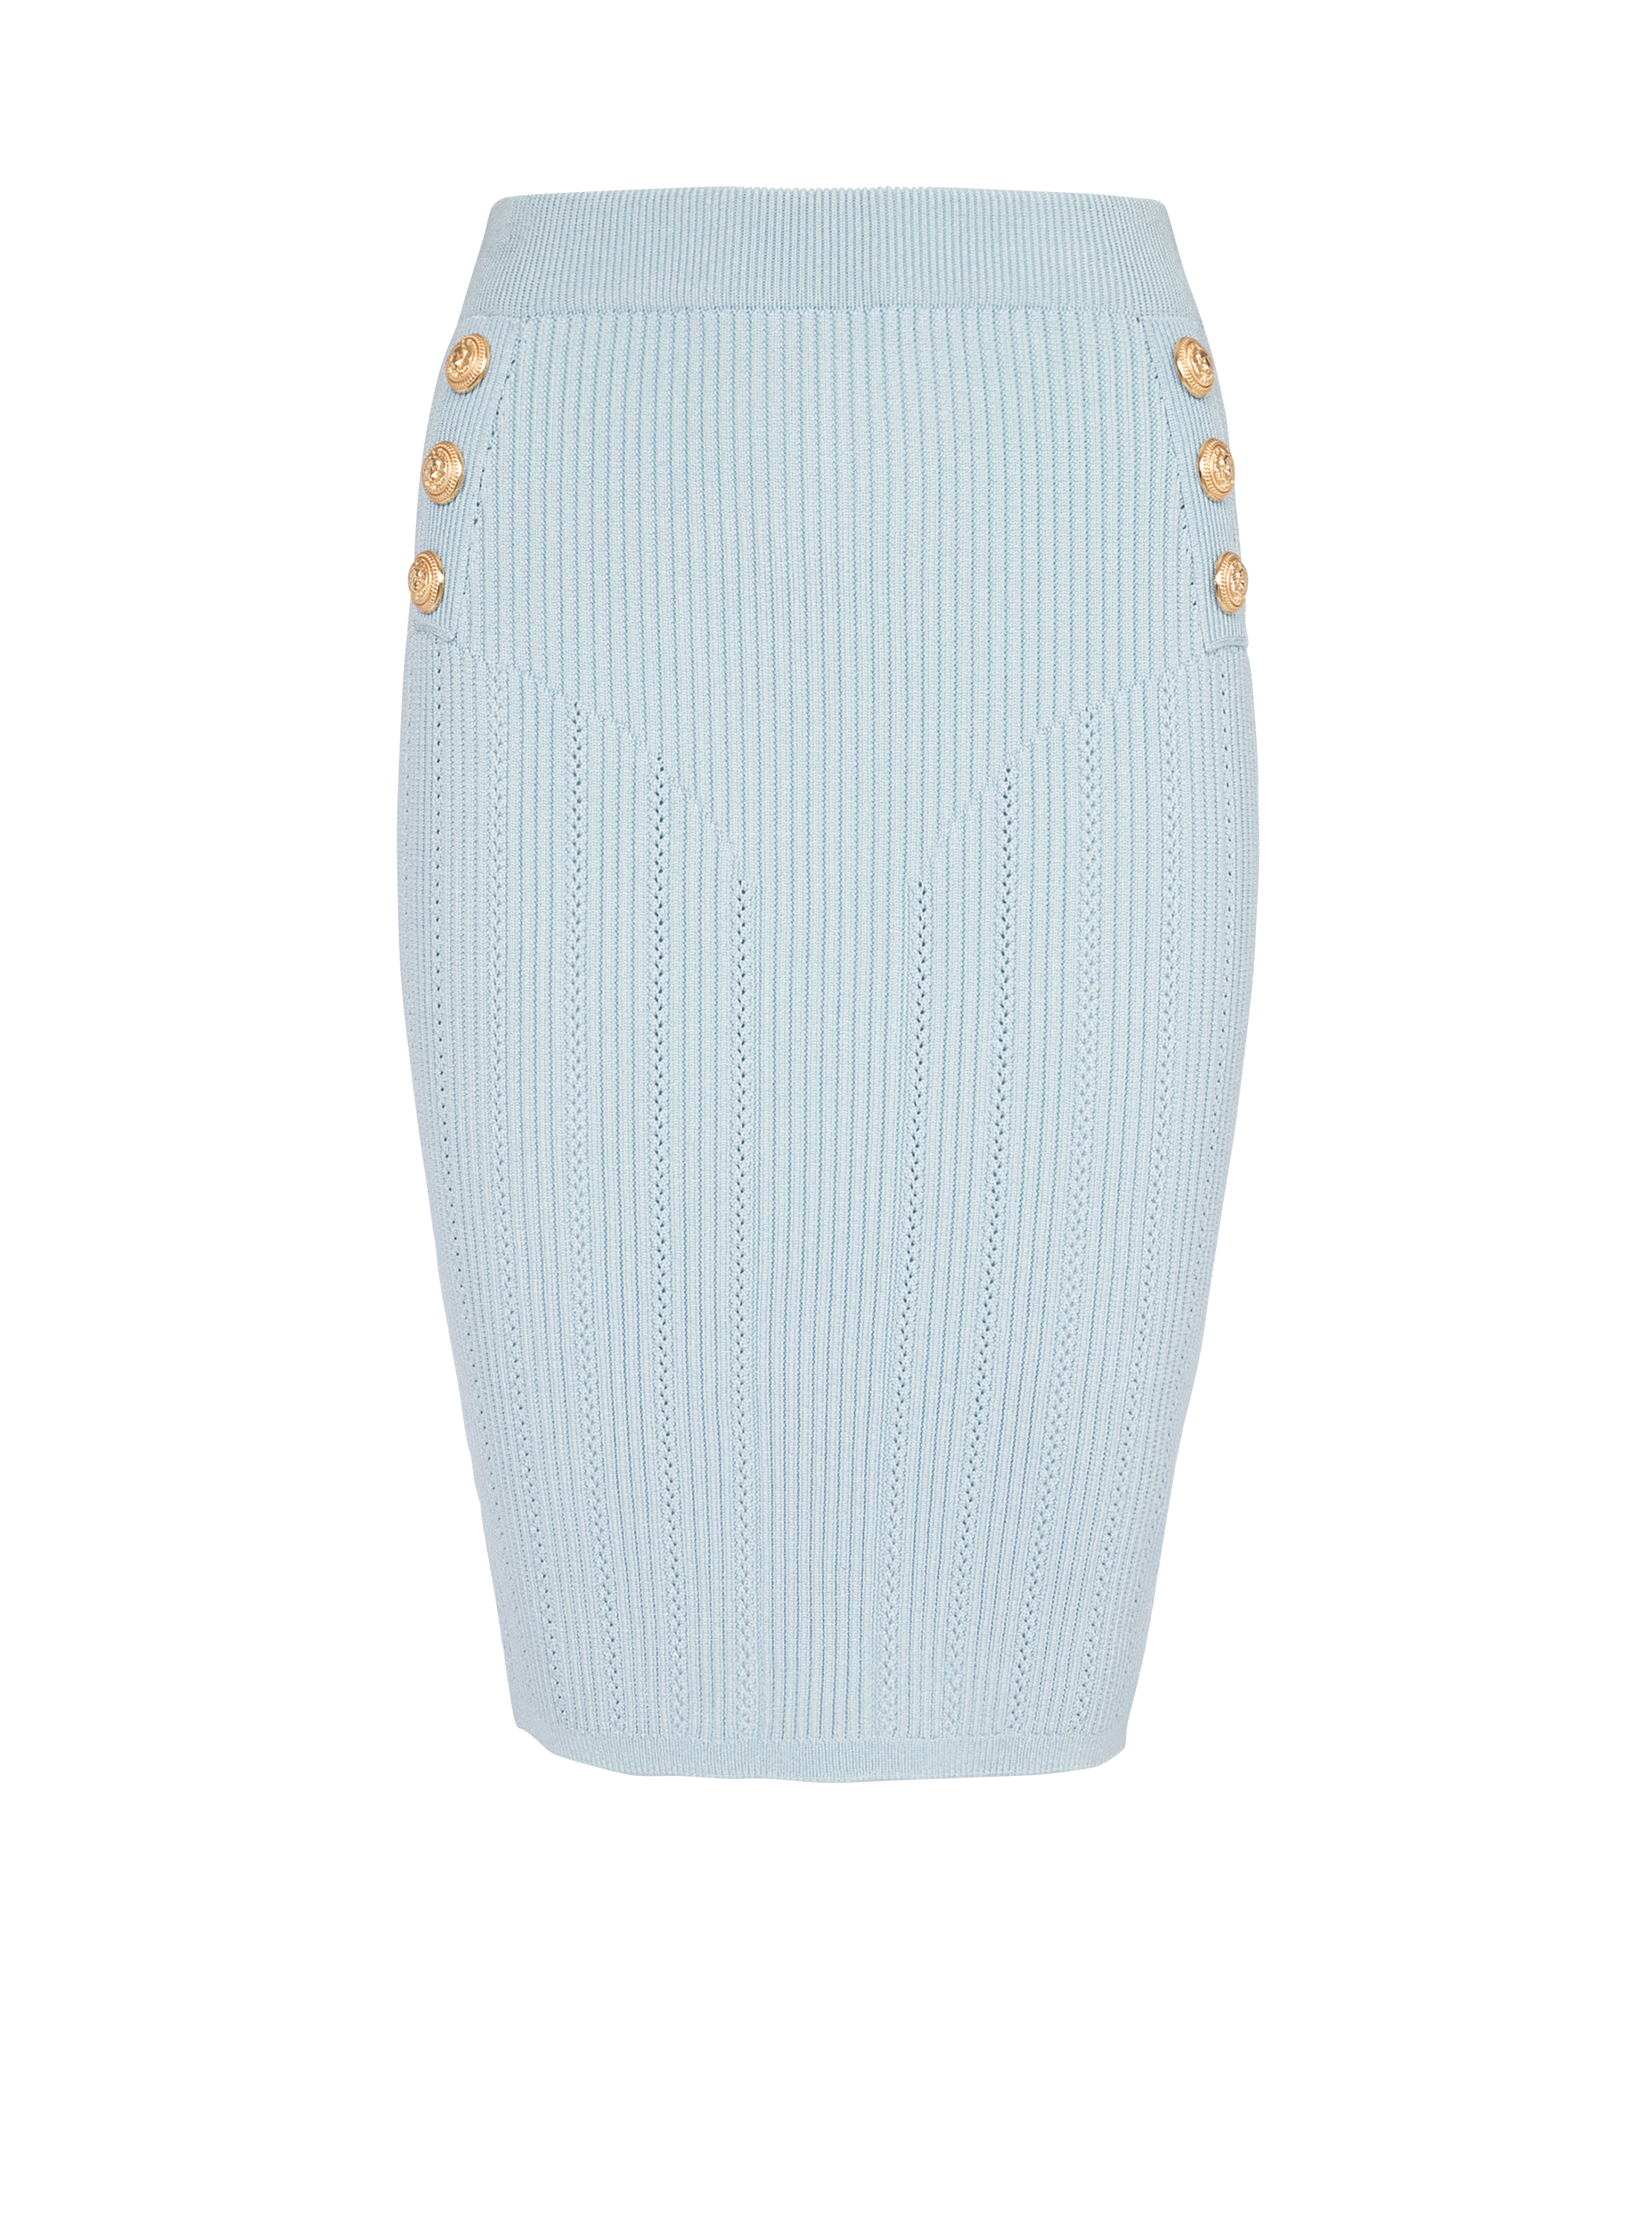 Mid-length knit skirt, blue, hi-res